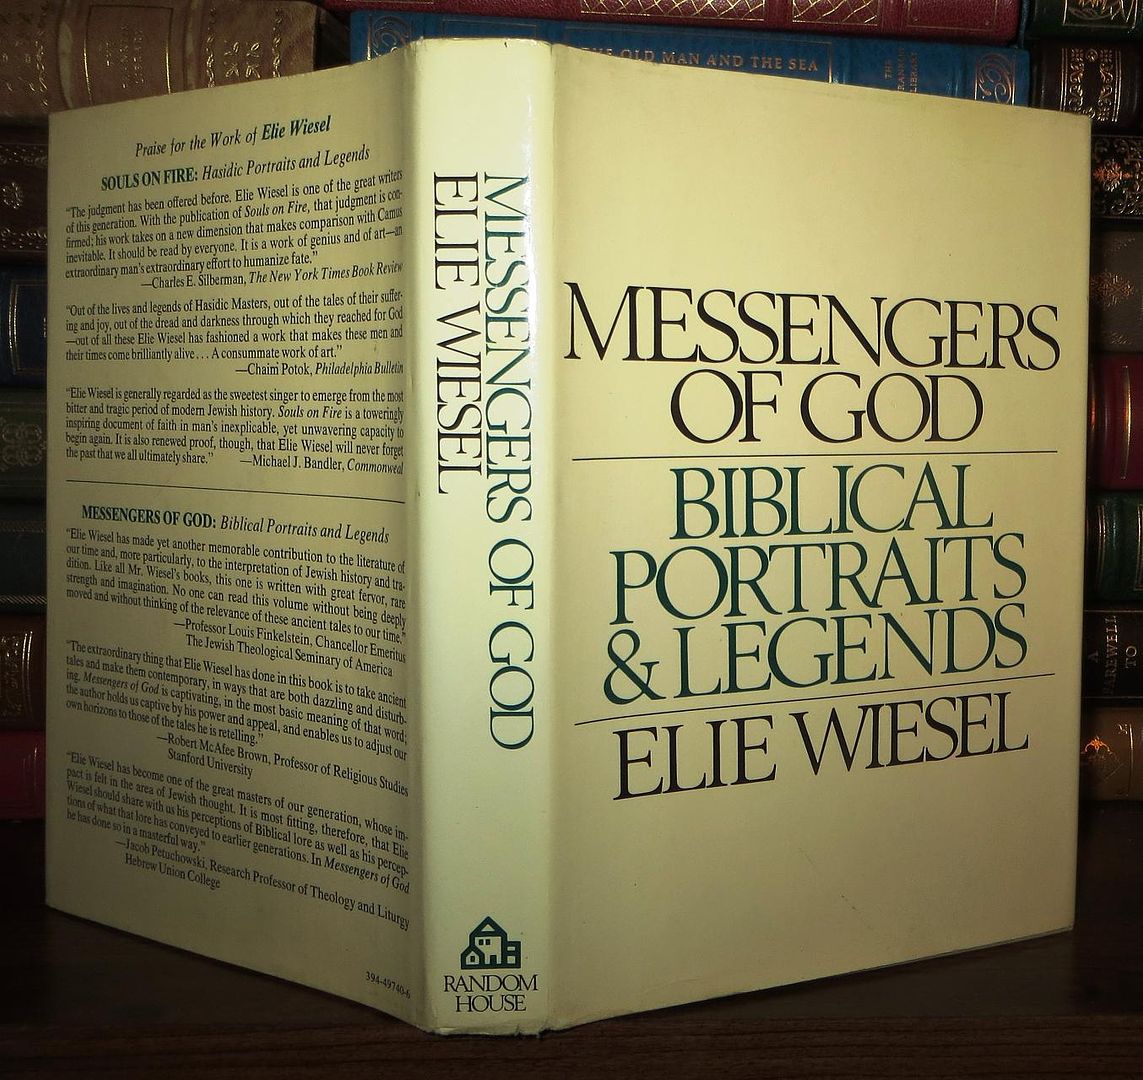 WIESEL, ELIE - Messengers of God Biblical Portraits and Legends